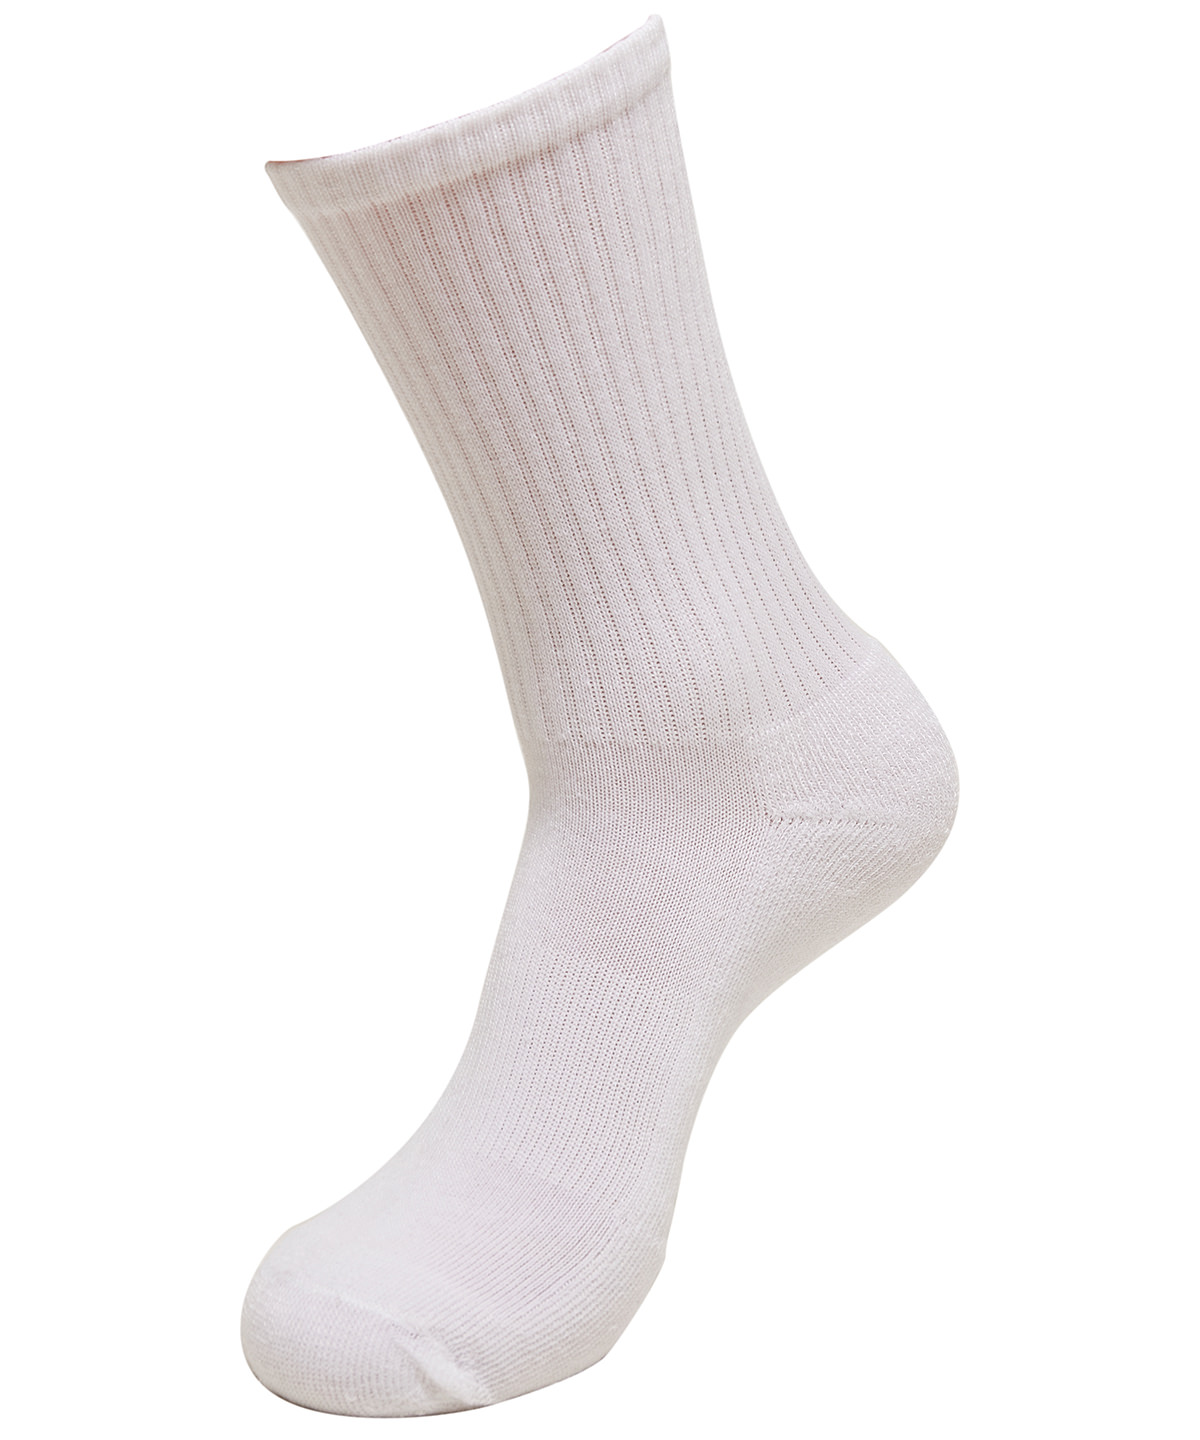 Crew Socks White Size 4346